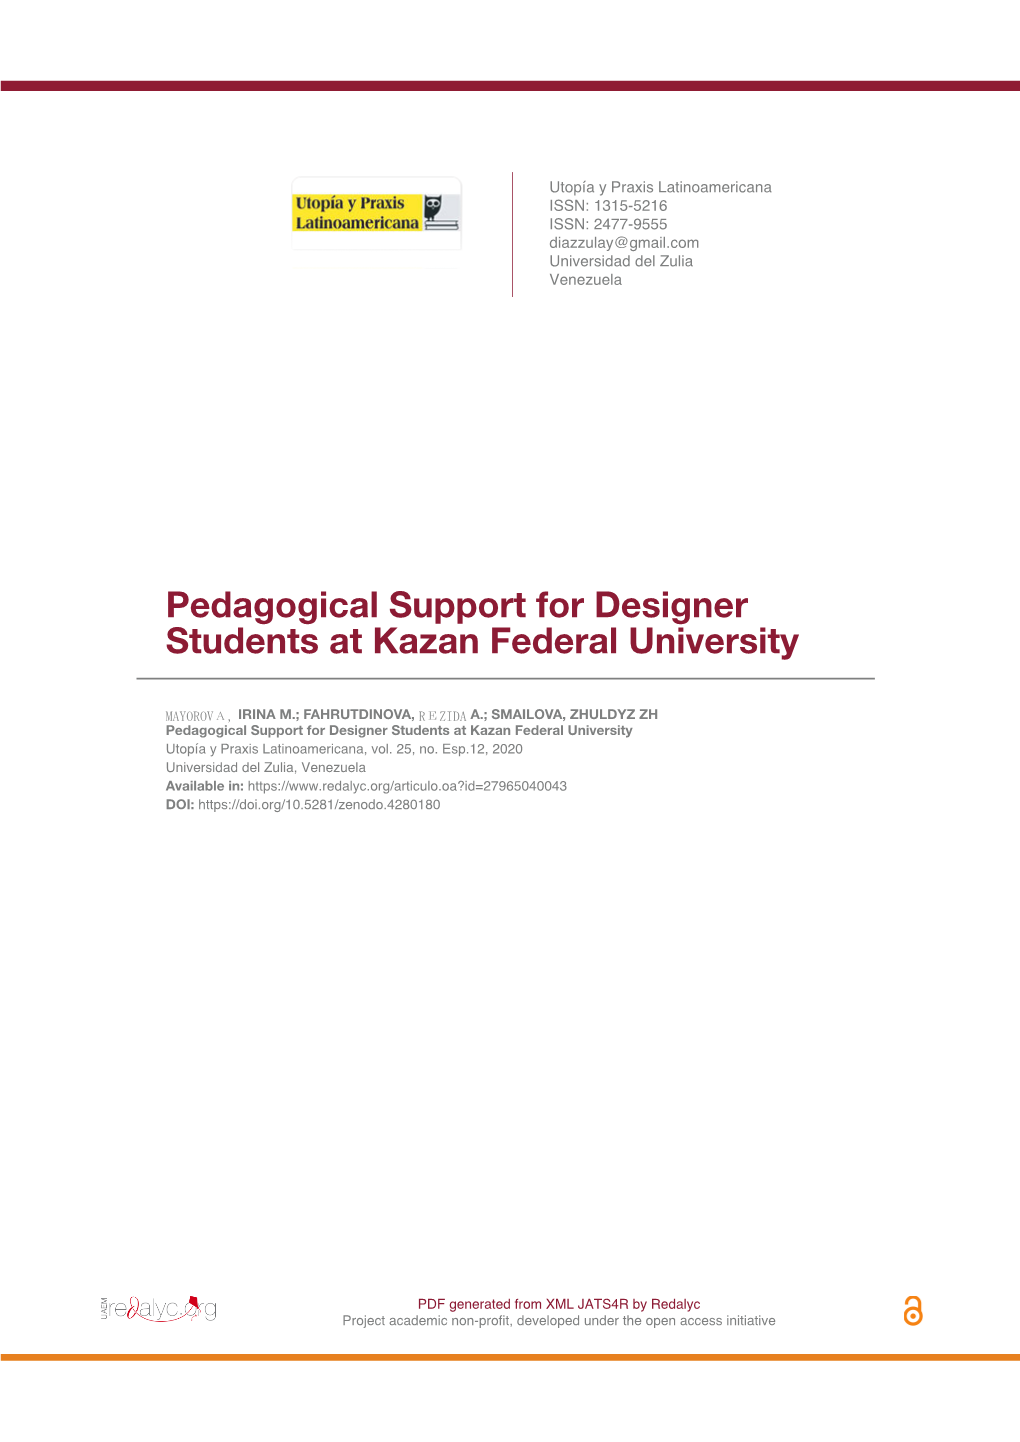 Pedagogical Support for Designer Students at Kazan Federal University